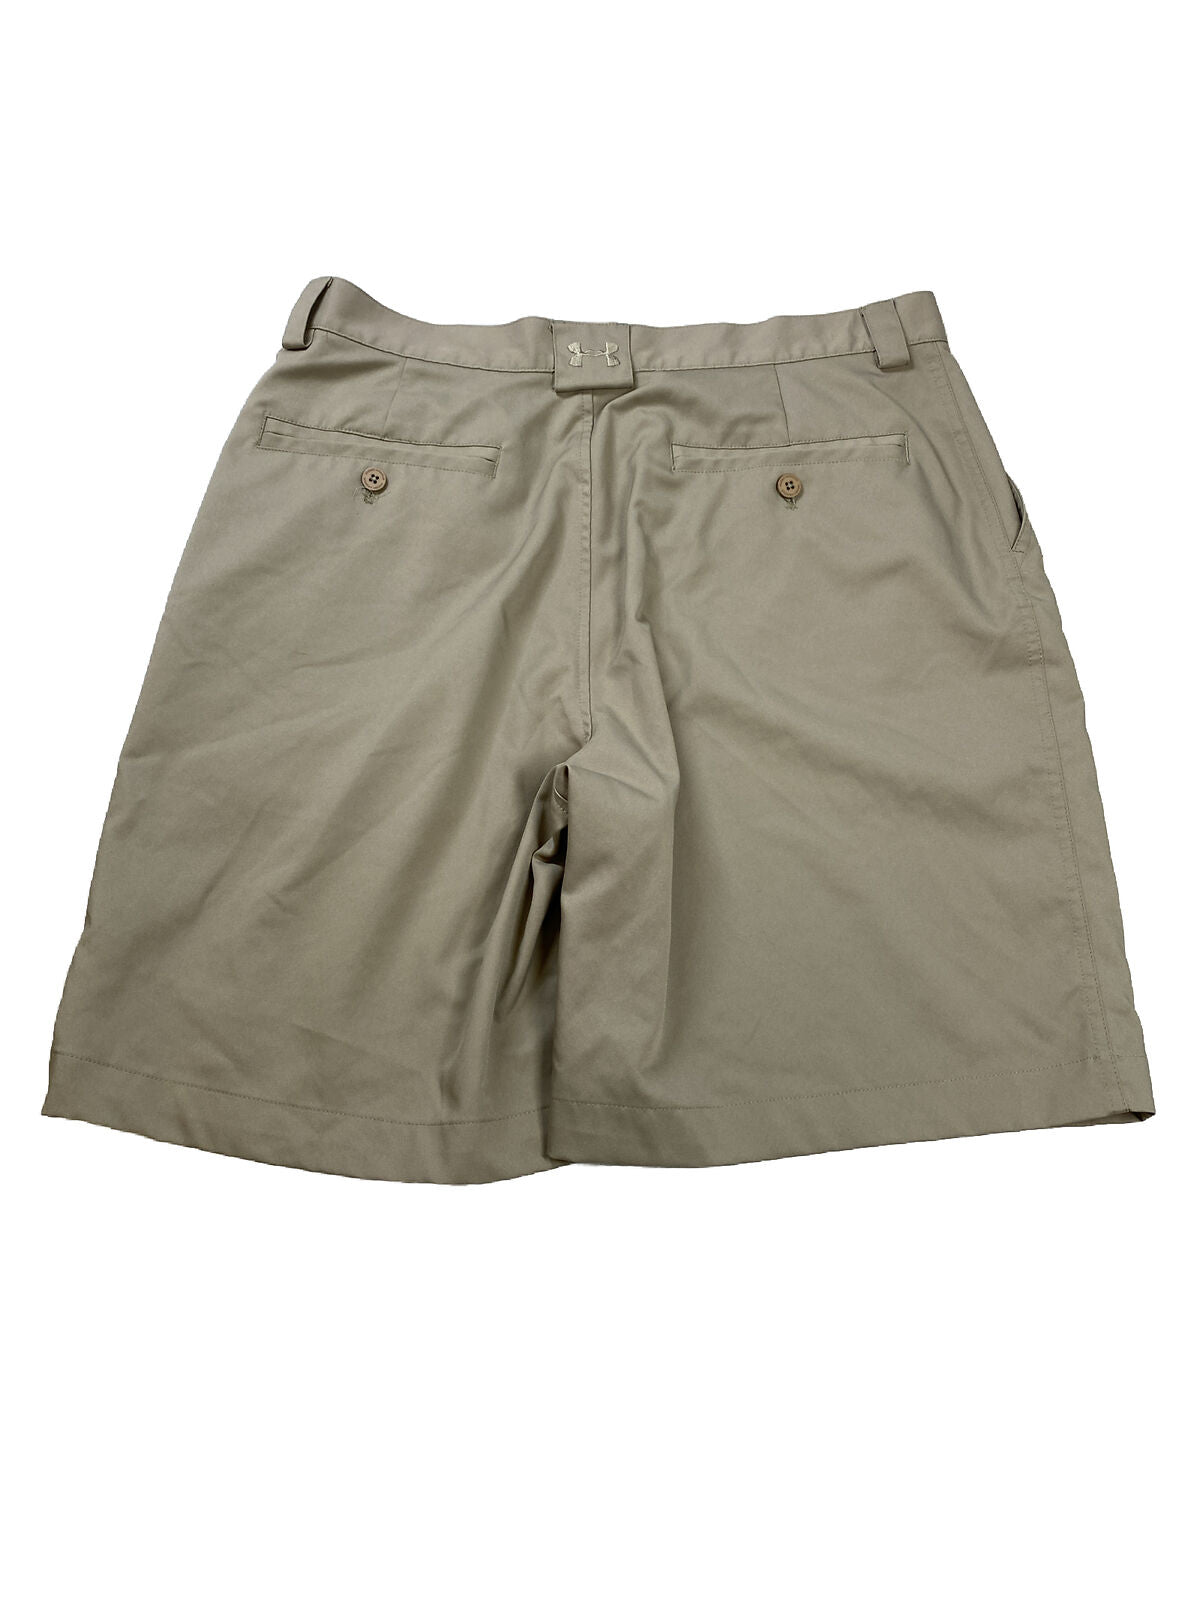 Under Armour Men's Beige Flat Front Golf Shorts - 36